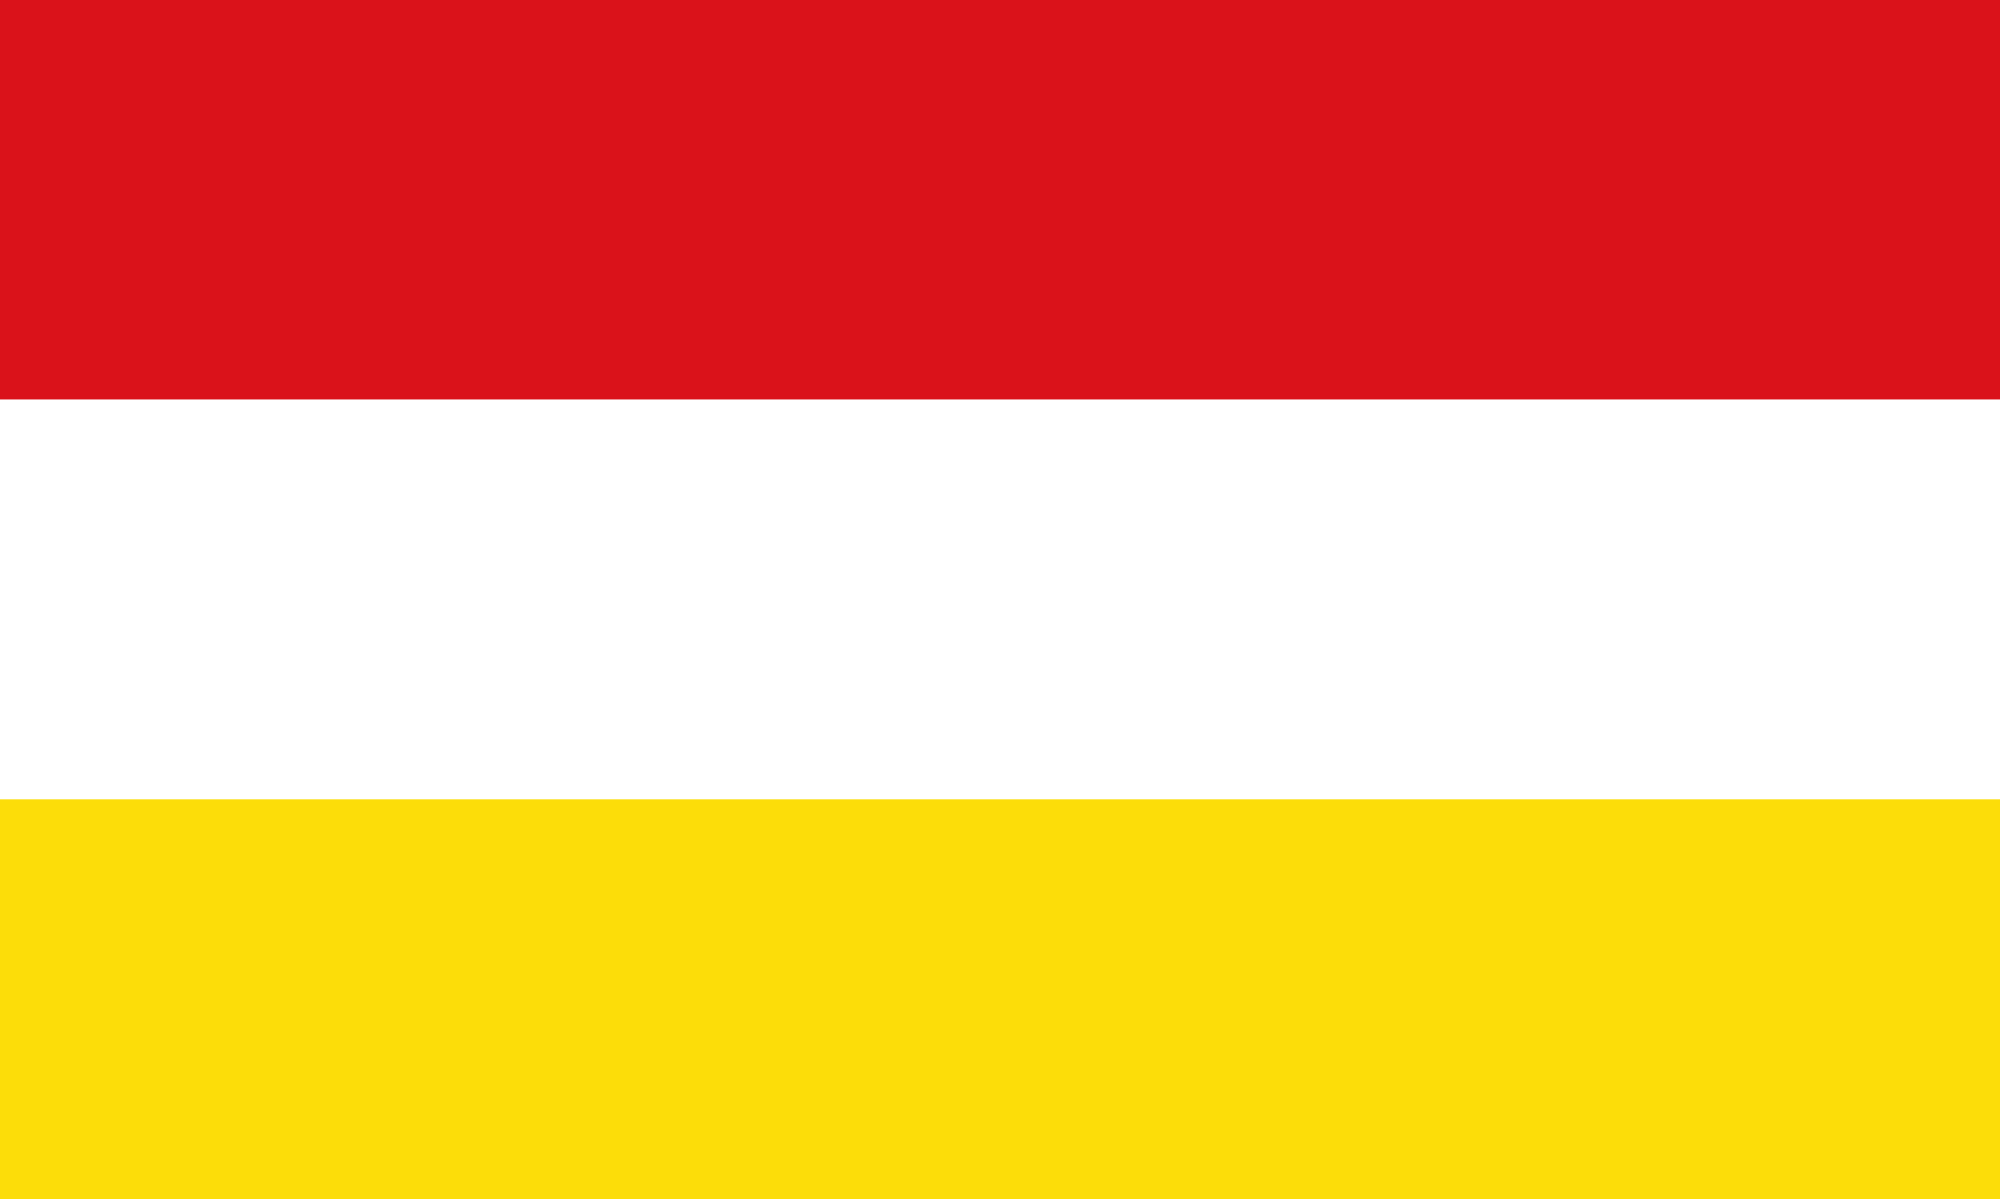 File:Flag black white 5x3.svg - Wikimedia Commons